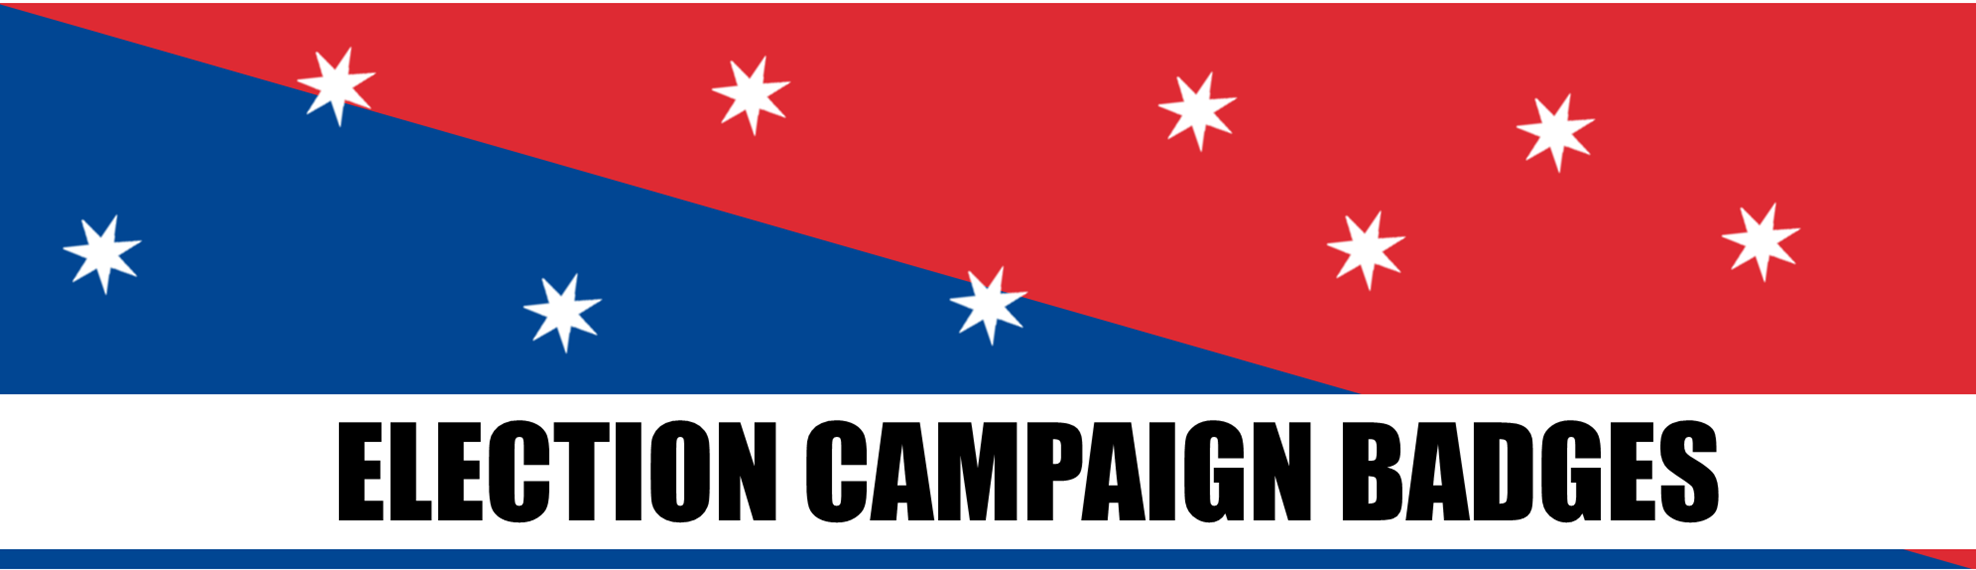 Election Campaign Badges